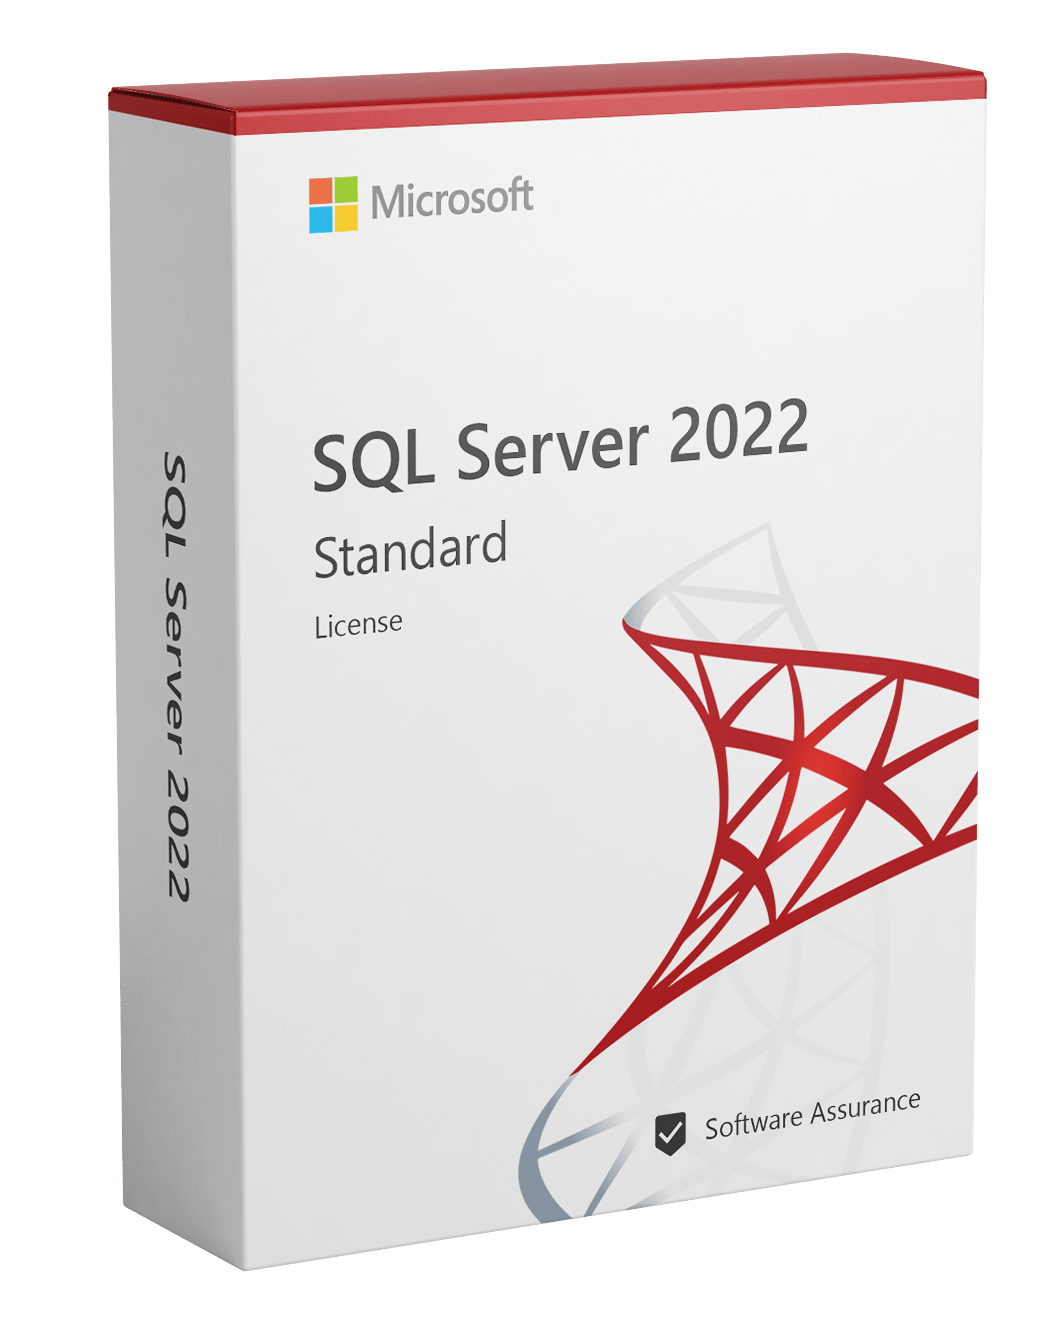 Microsoft Software Microsoft SQL Server 2022 Standard - License (w/ Software Assurance)